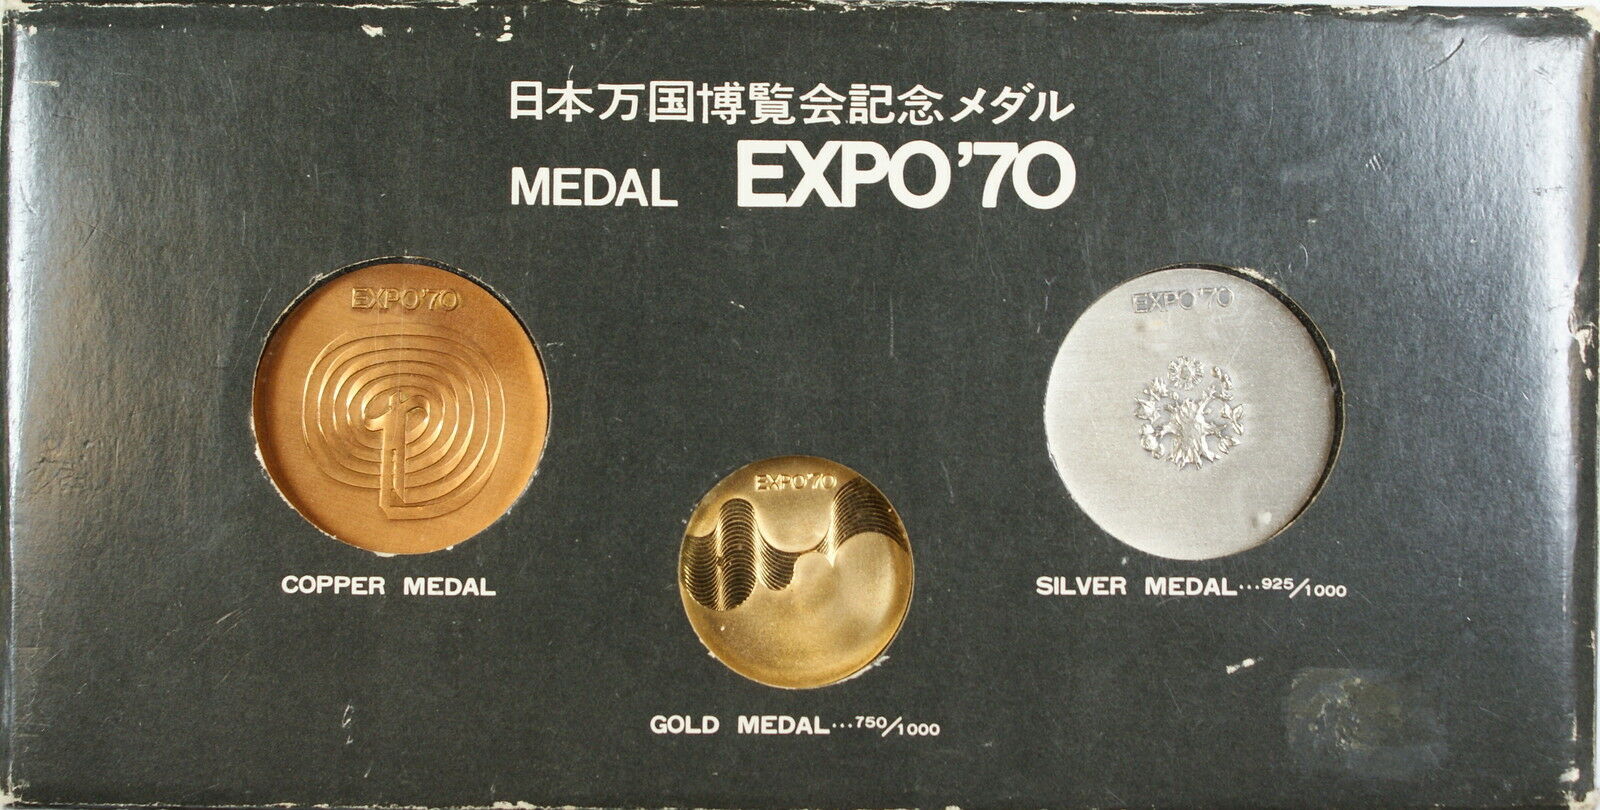 Weltmünzen Medal 1970 World Expo in Osaka Japan Gold